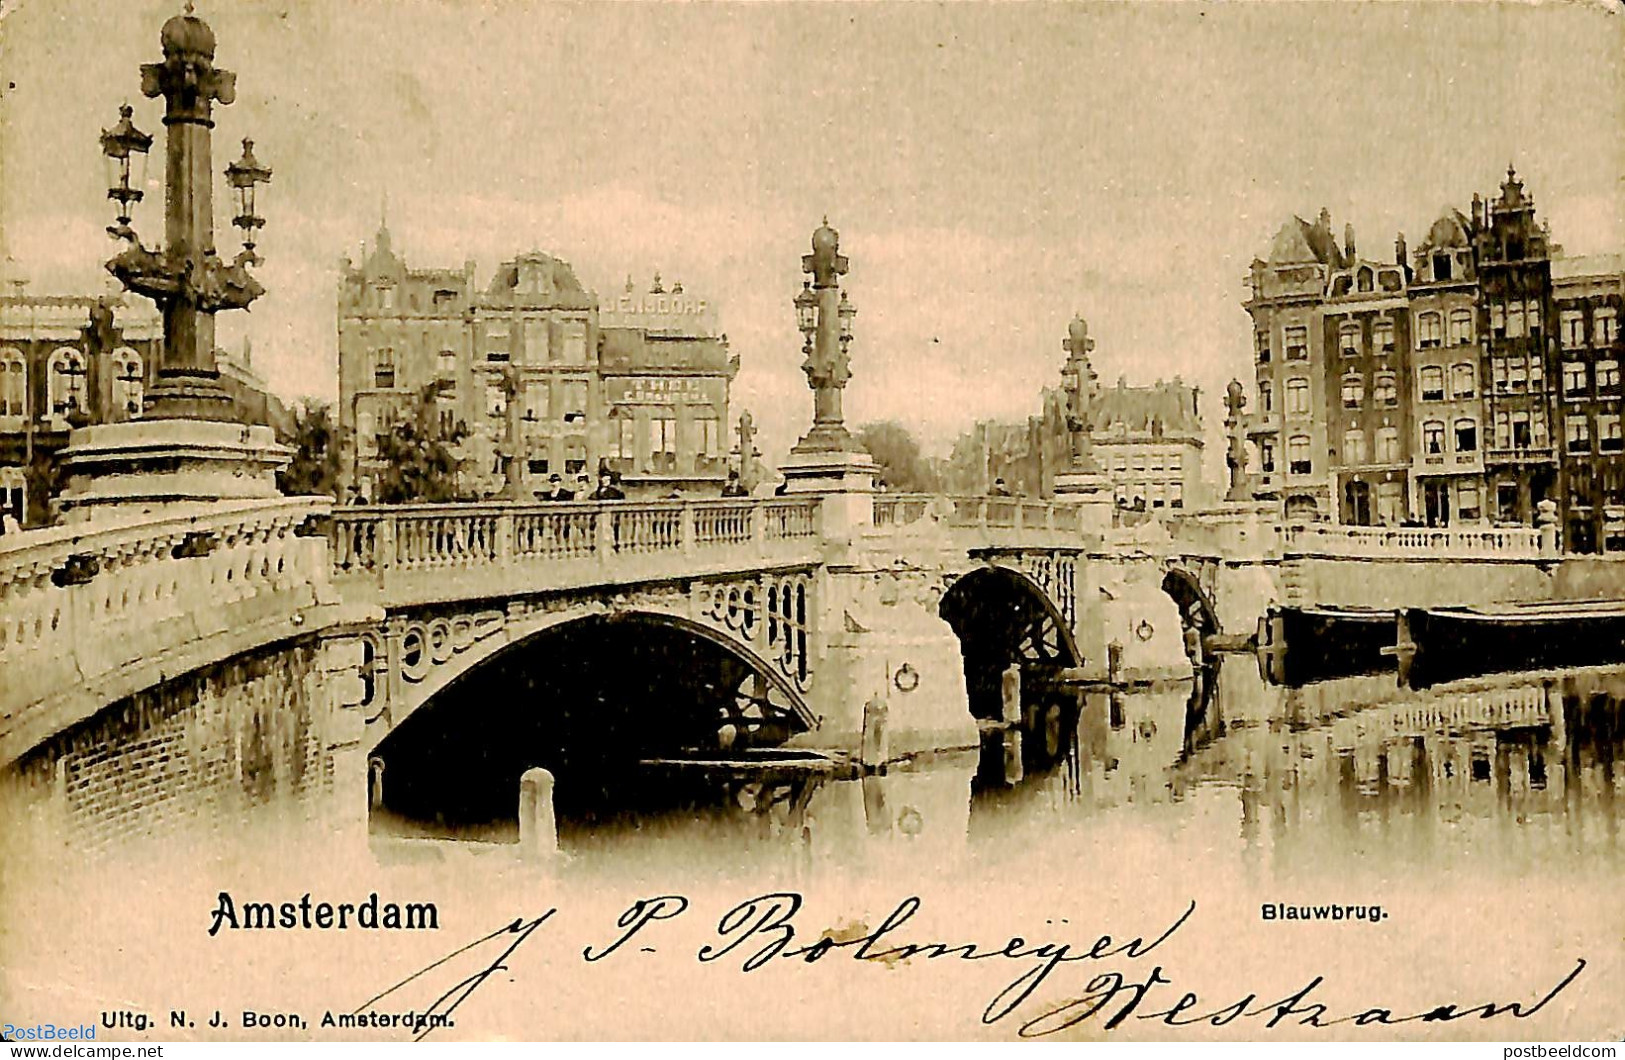 Netherlands 1920 Postcard From Westzaan (kleinrond) To St. Nicolas Argentina, Postal History - Briefe U. Dokumente